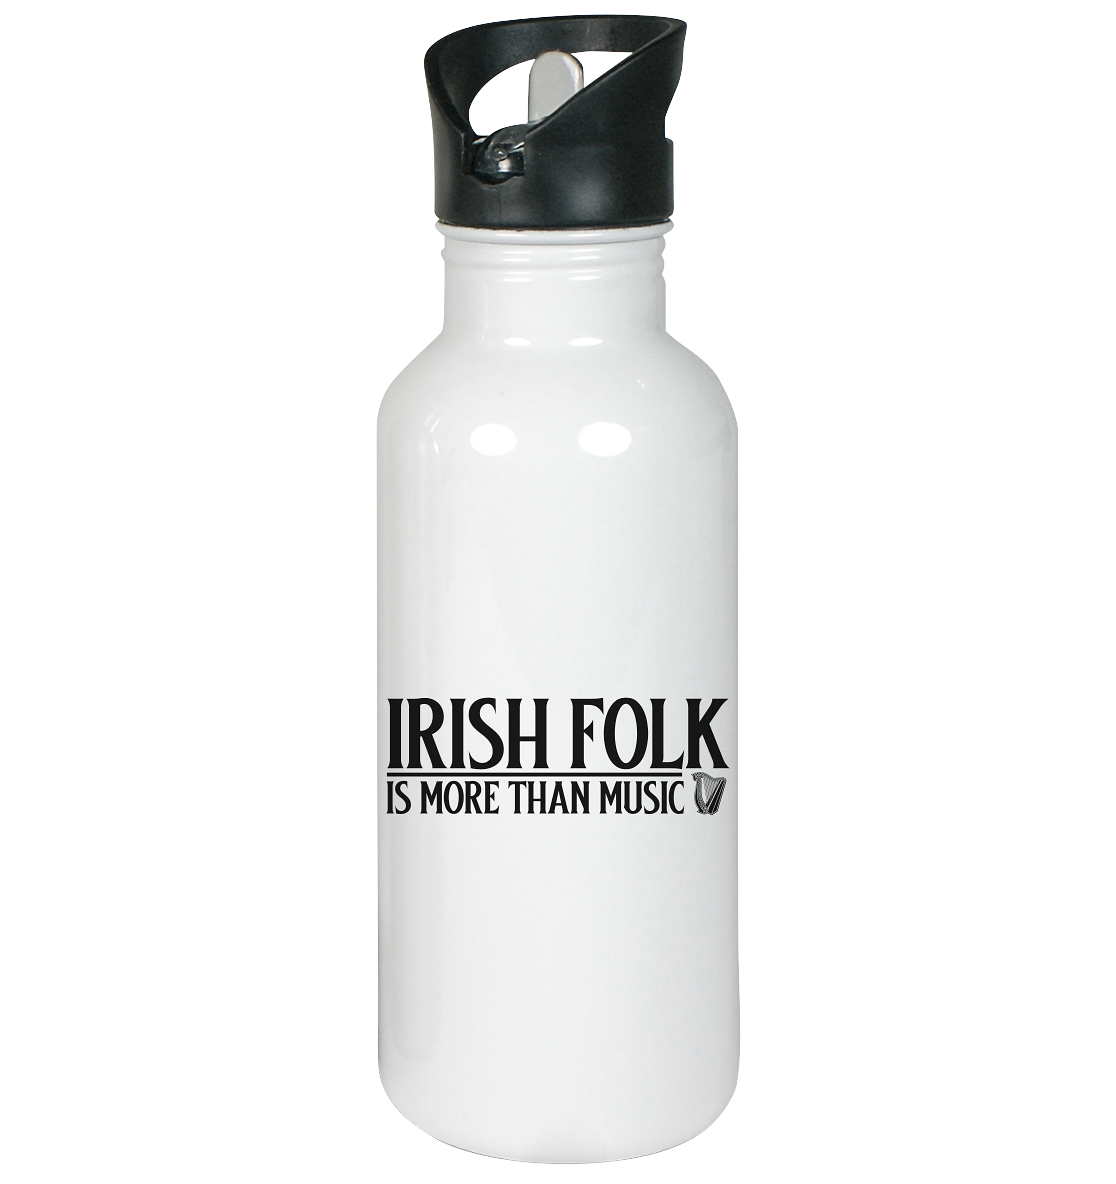 Irish Folk "Is More Than Music" - Edelstahl-Trinkflasche